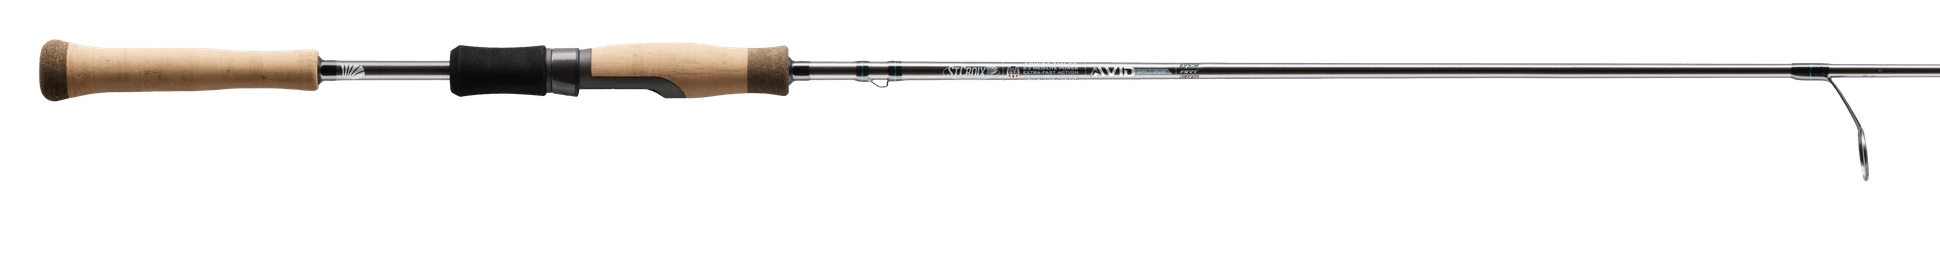 St. Croix Rods Avid Series Inshore Spinning Rod, Seafoam Green Metallic,  7'0